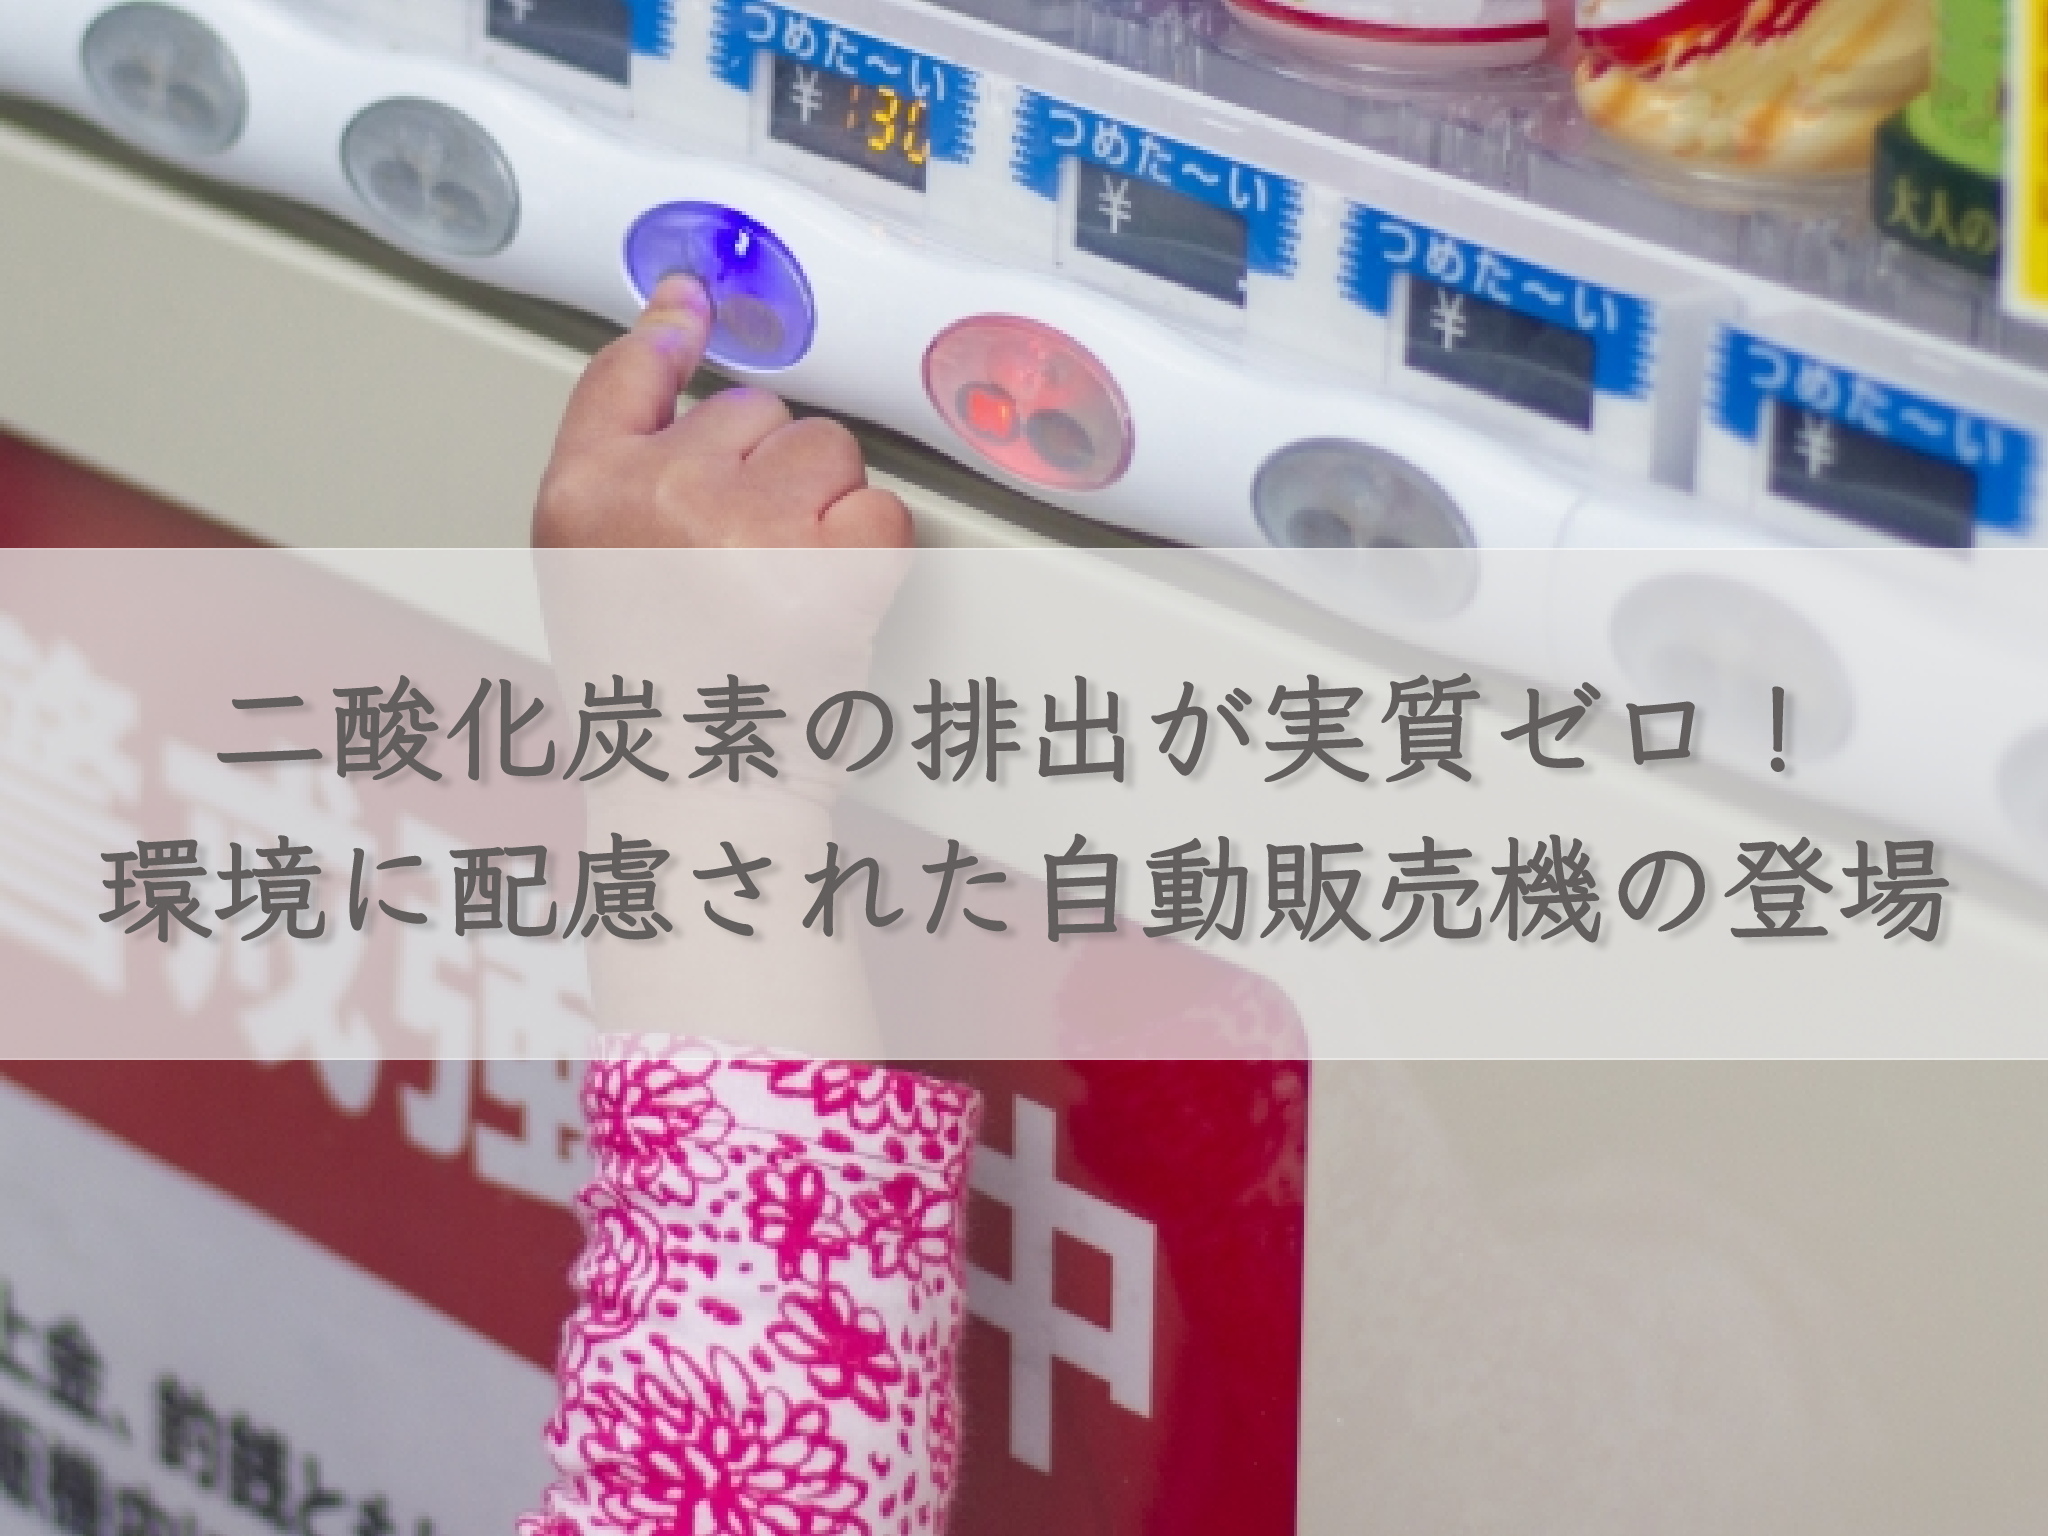 eco-friendly-vending-machine